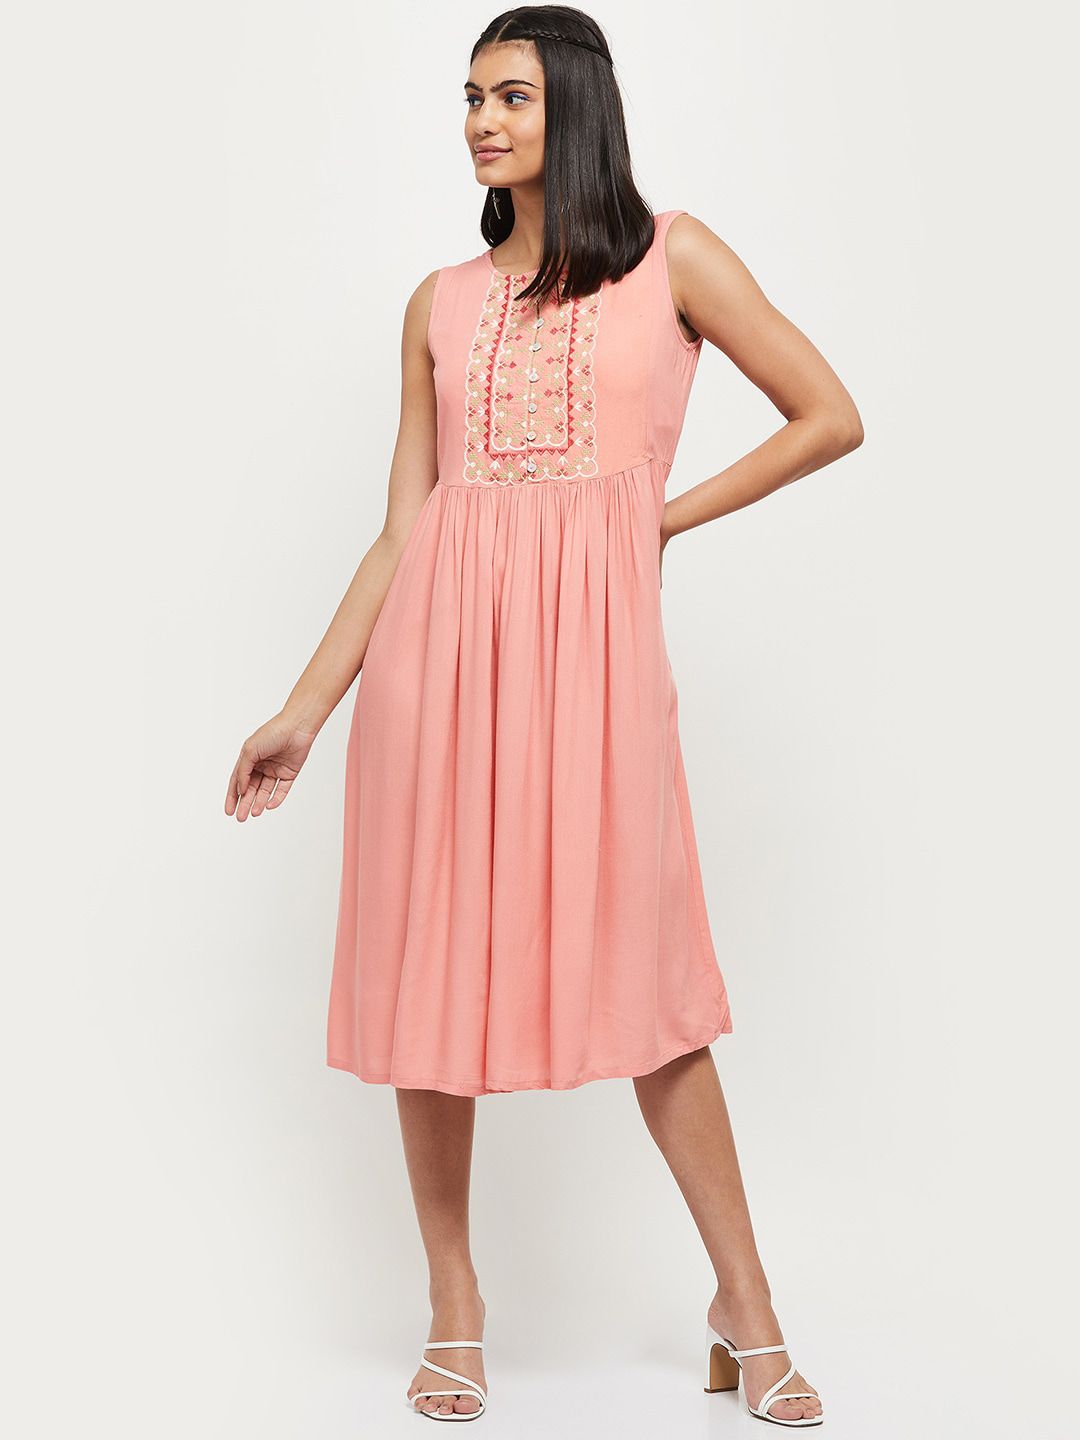 max Pink Midi Dress Price in India